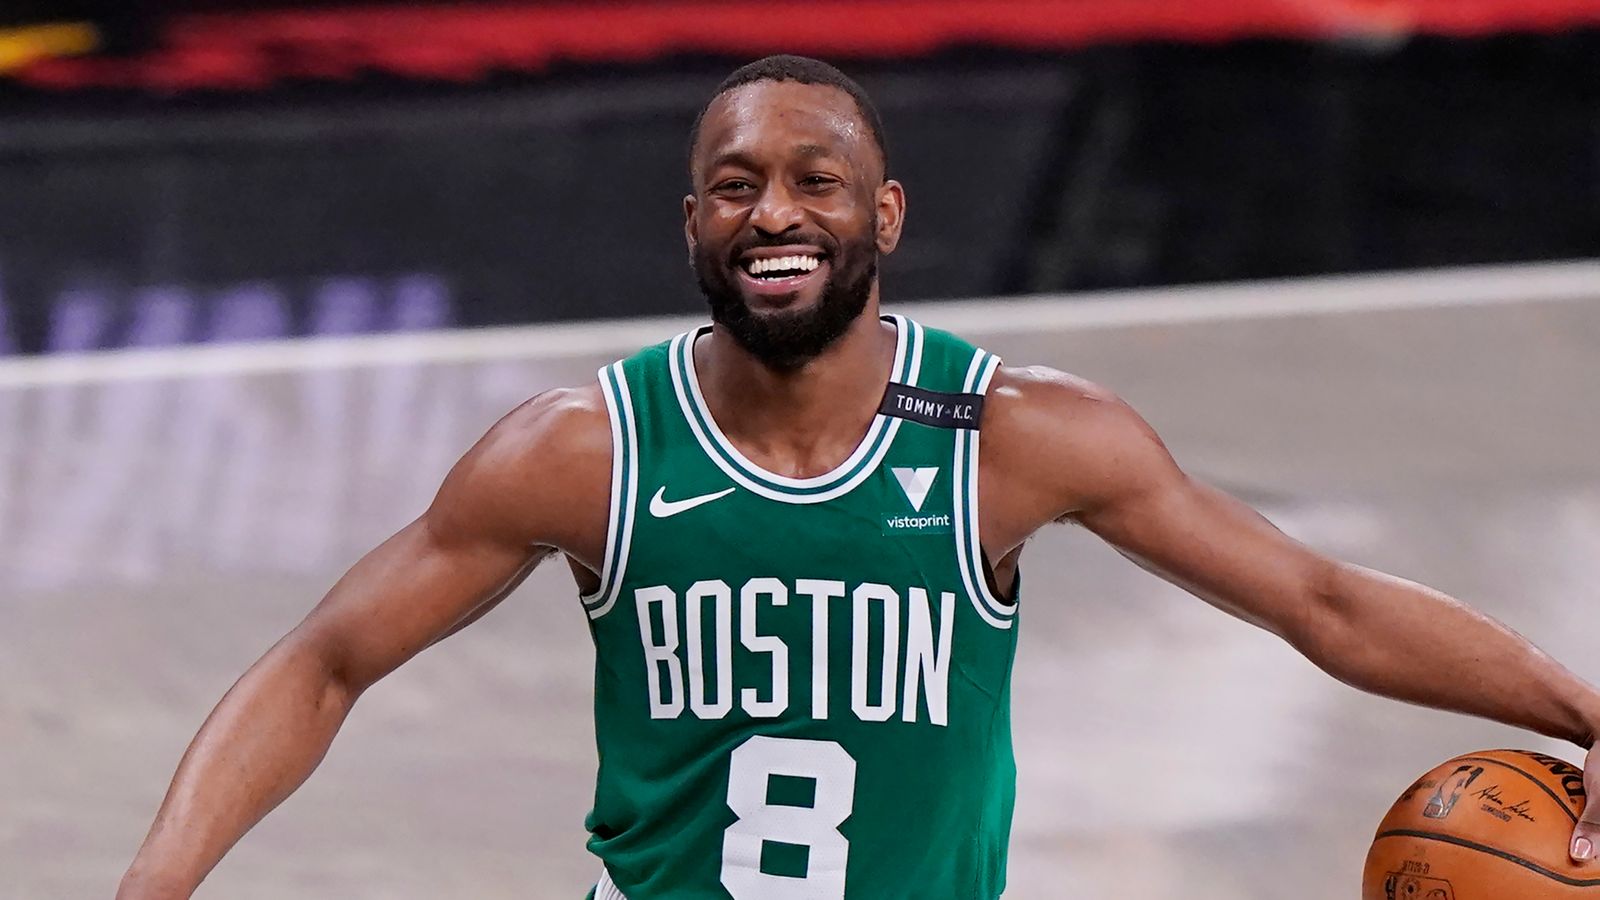 Celtics jerseys will now have Vistaprint logo with new partnership